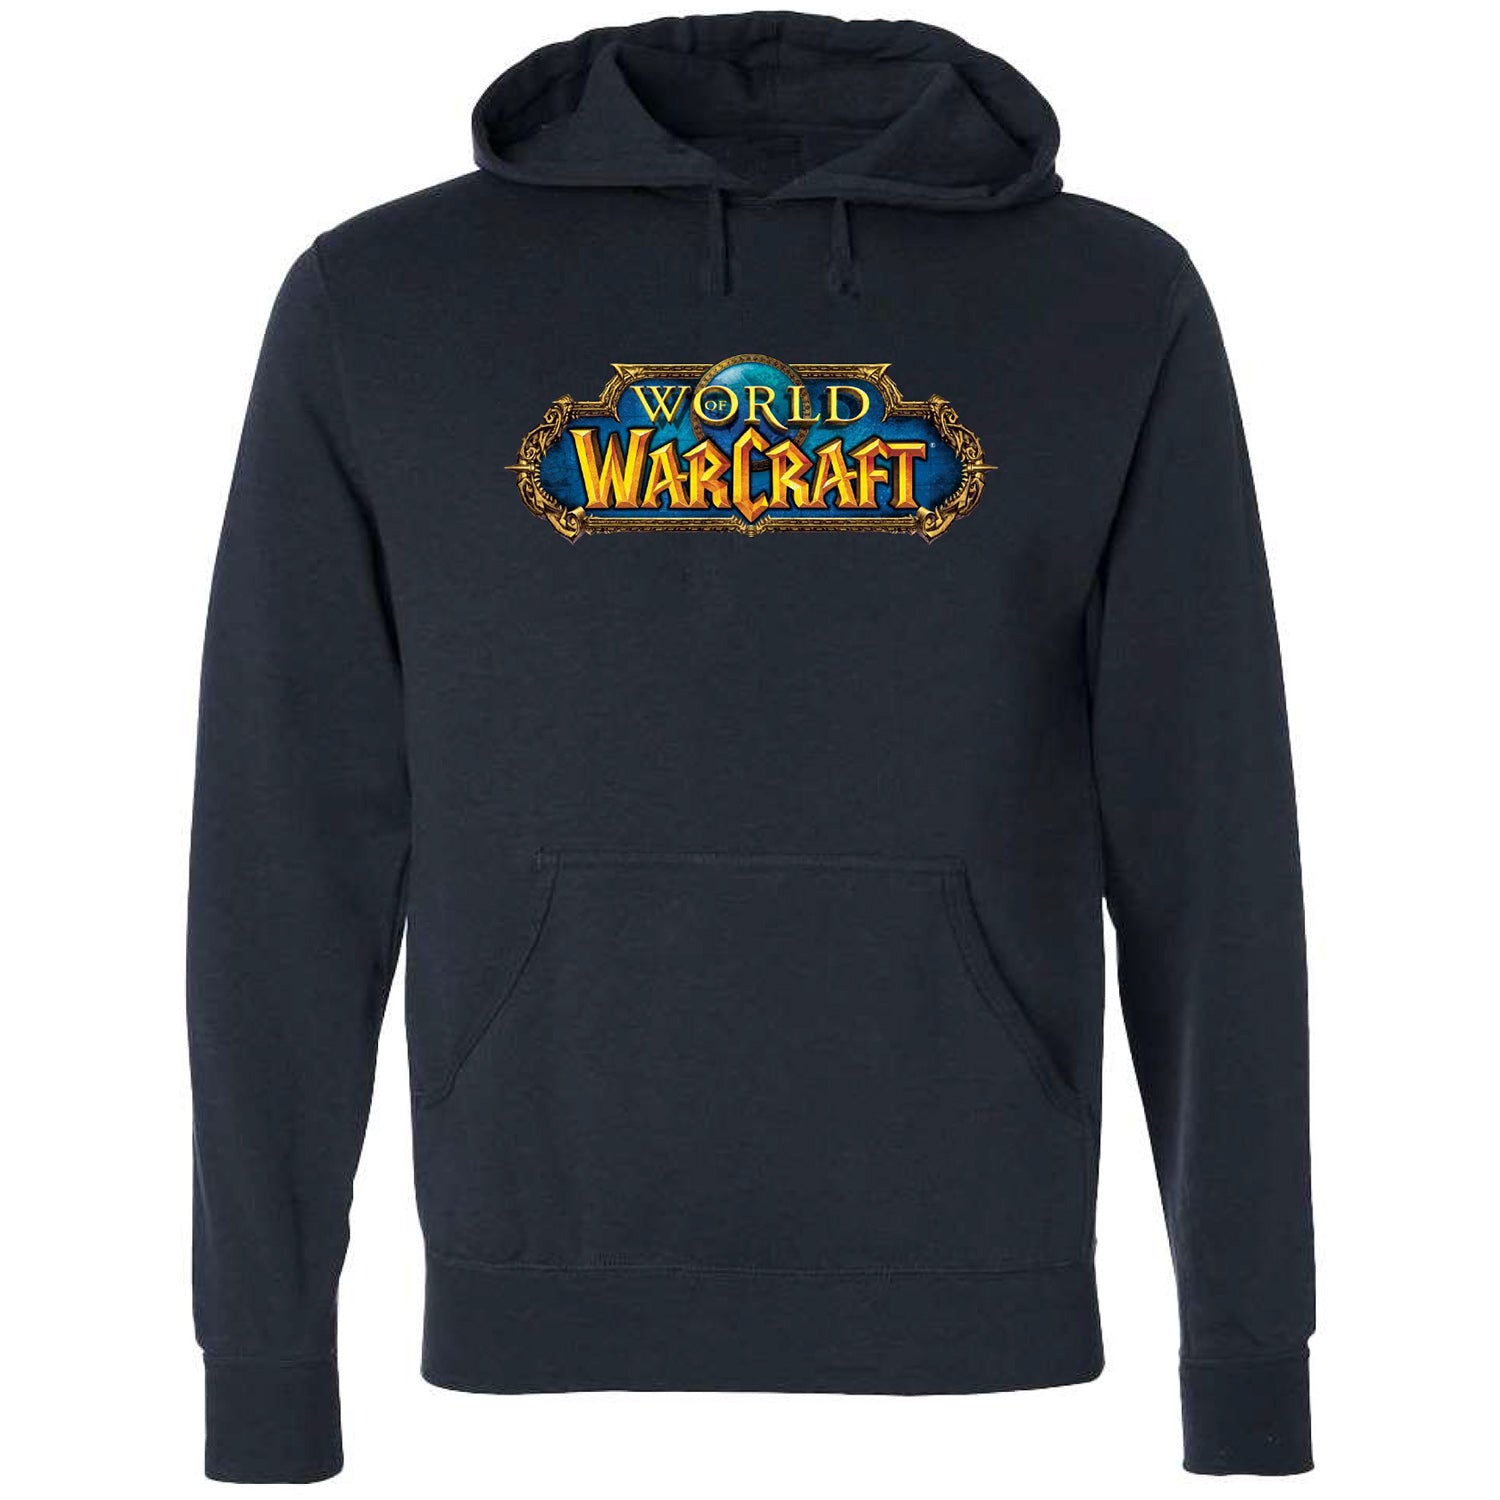 World of Warcraft Logo Hoodie - Front View Navy Version